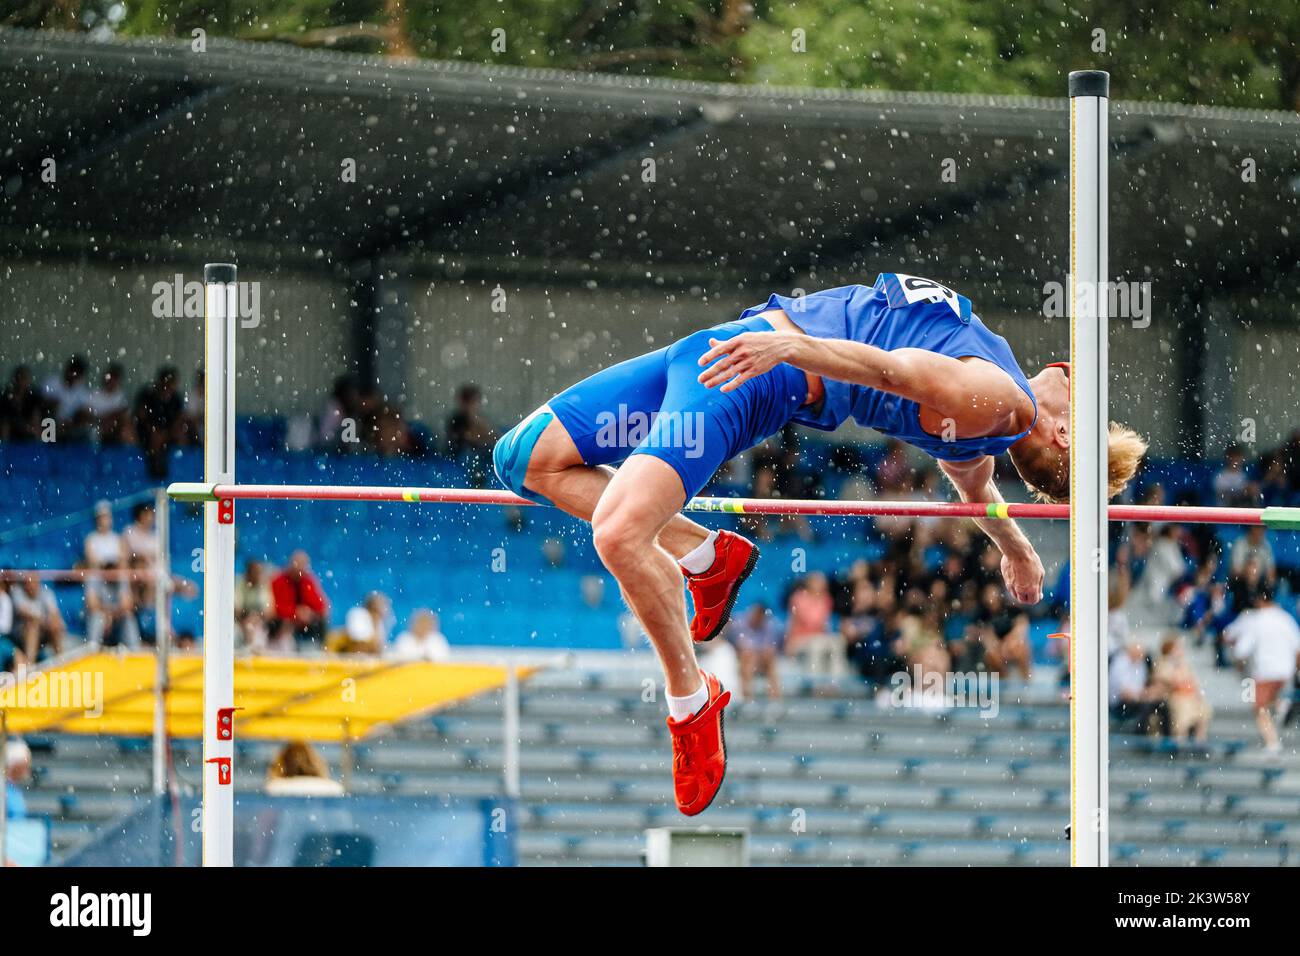 unsuccessful attempt athlete high jump in rain Stock Photo